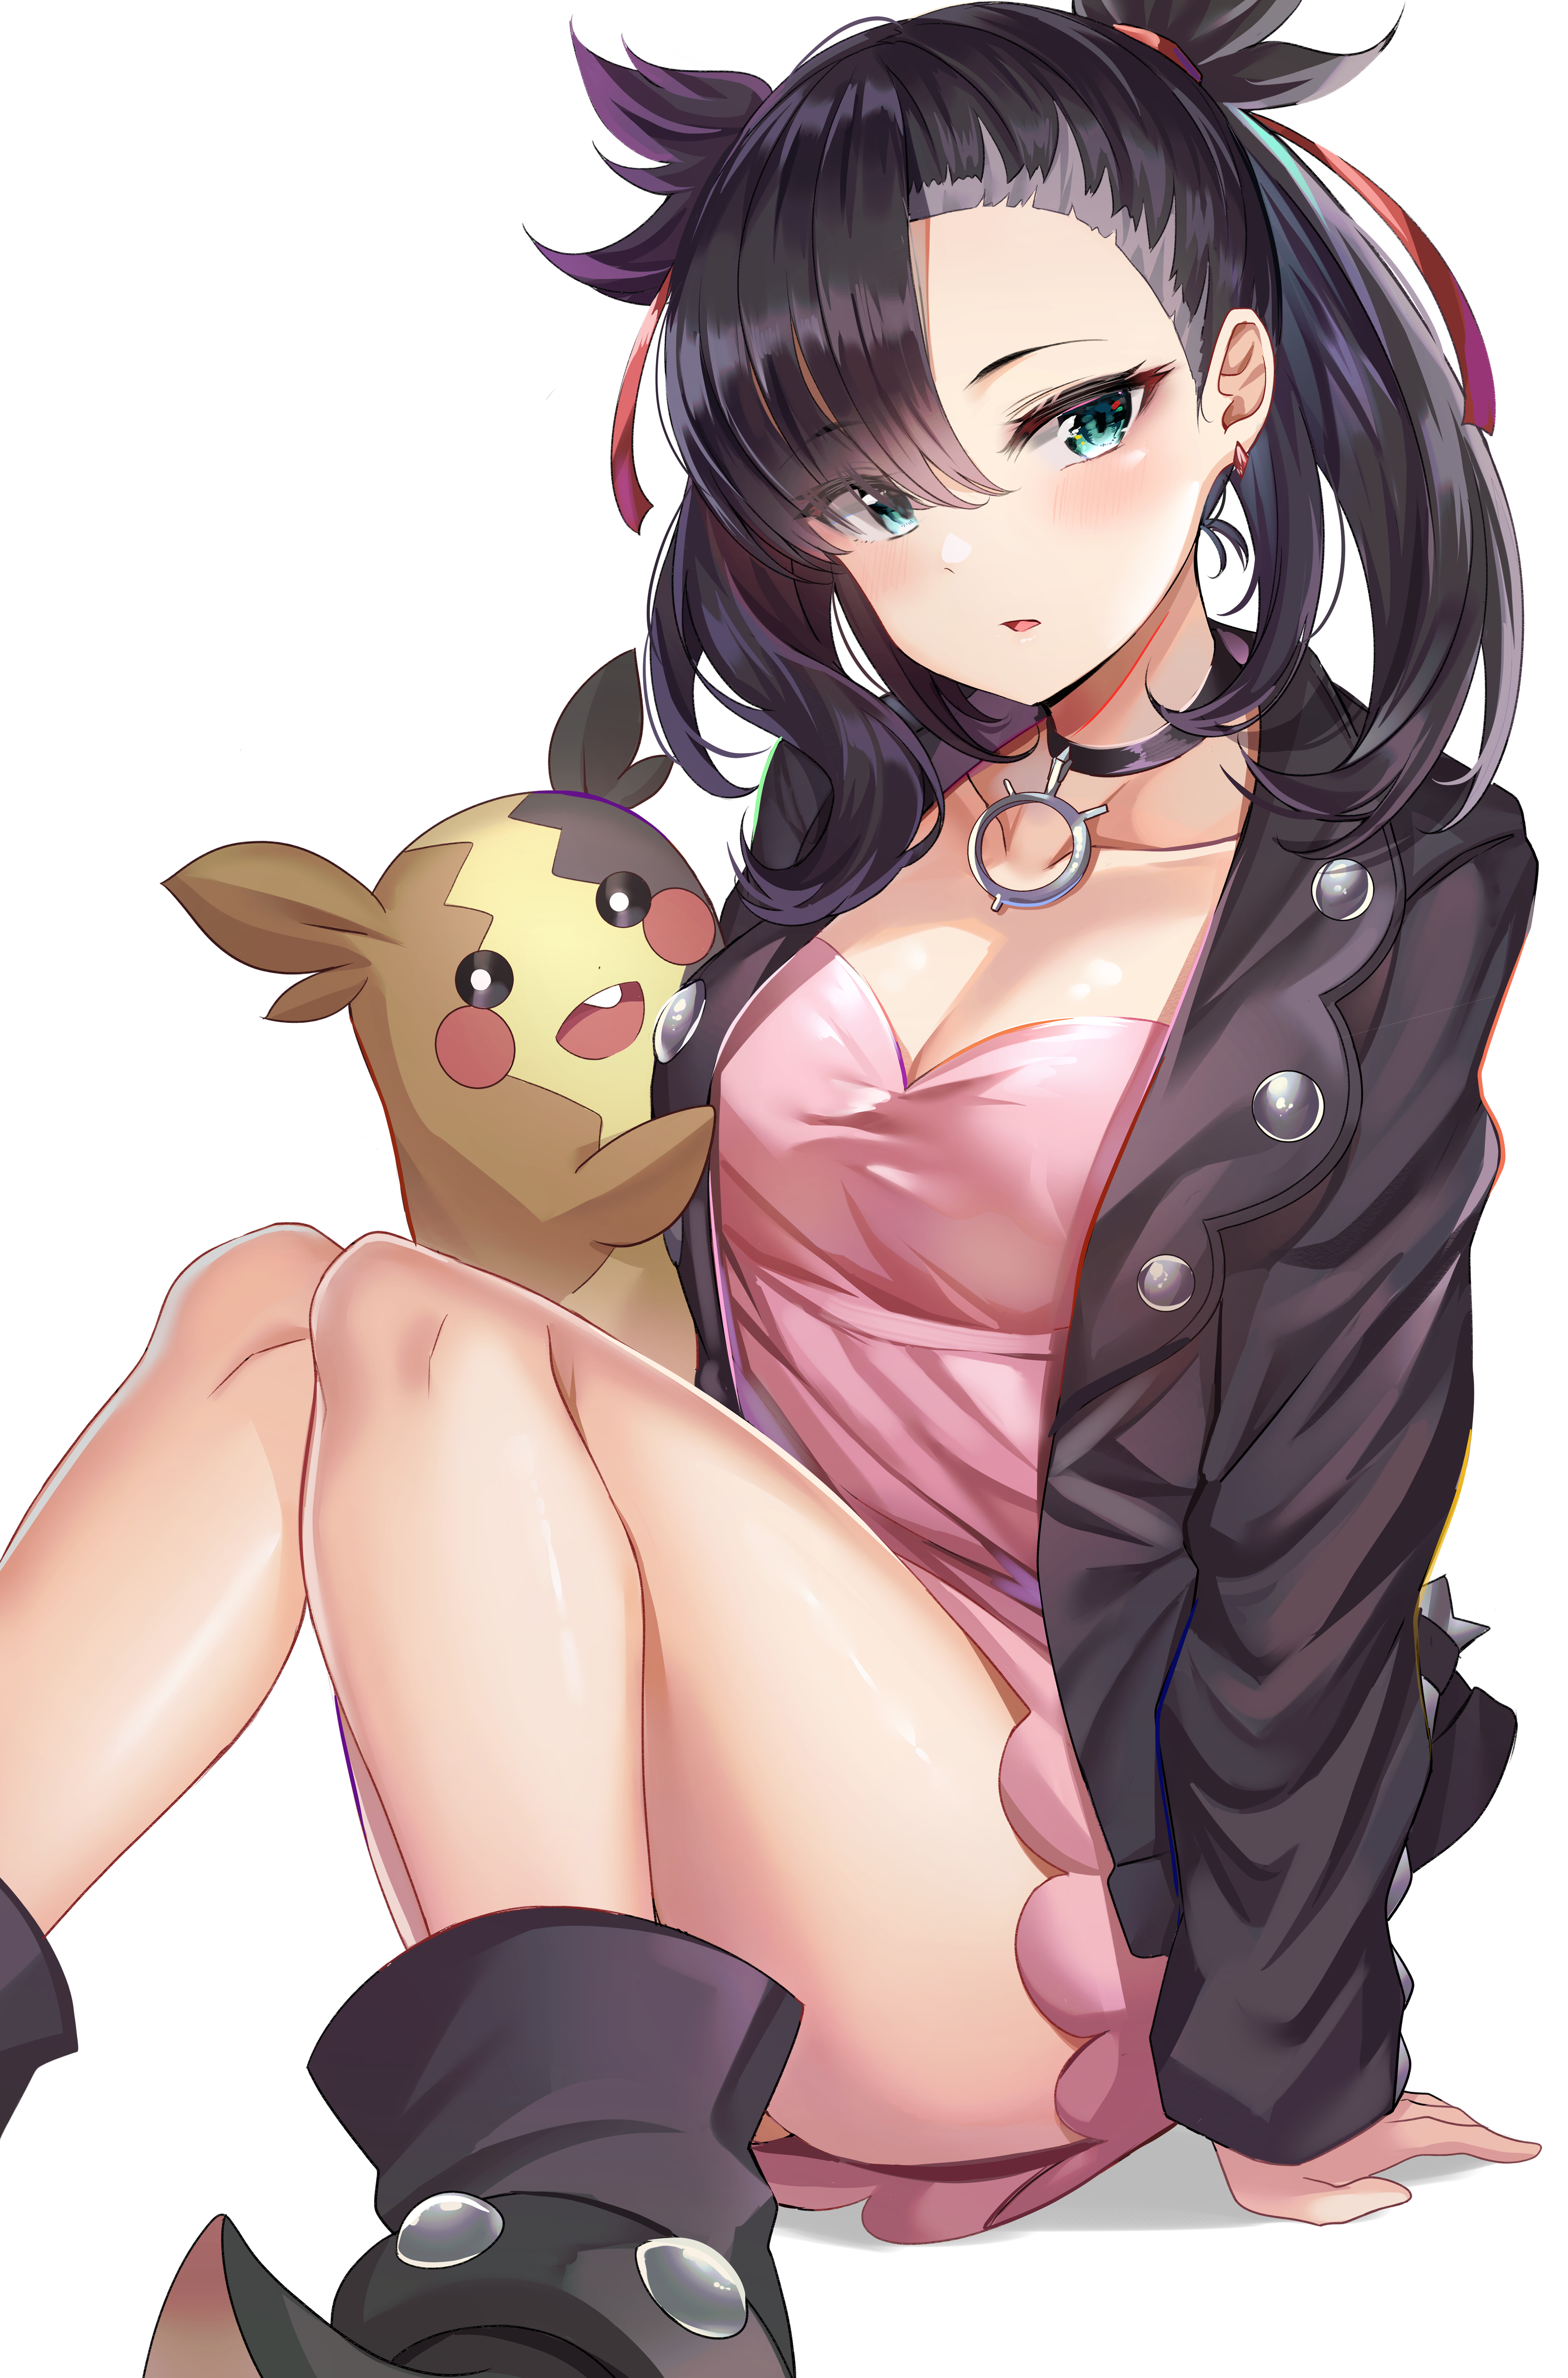 Anime Anime Girls Digital Art Artwork 2D Portrait Display Vertical Pokemon Sword And Shield Marnie M 3855x5846